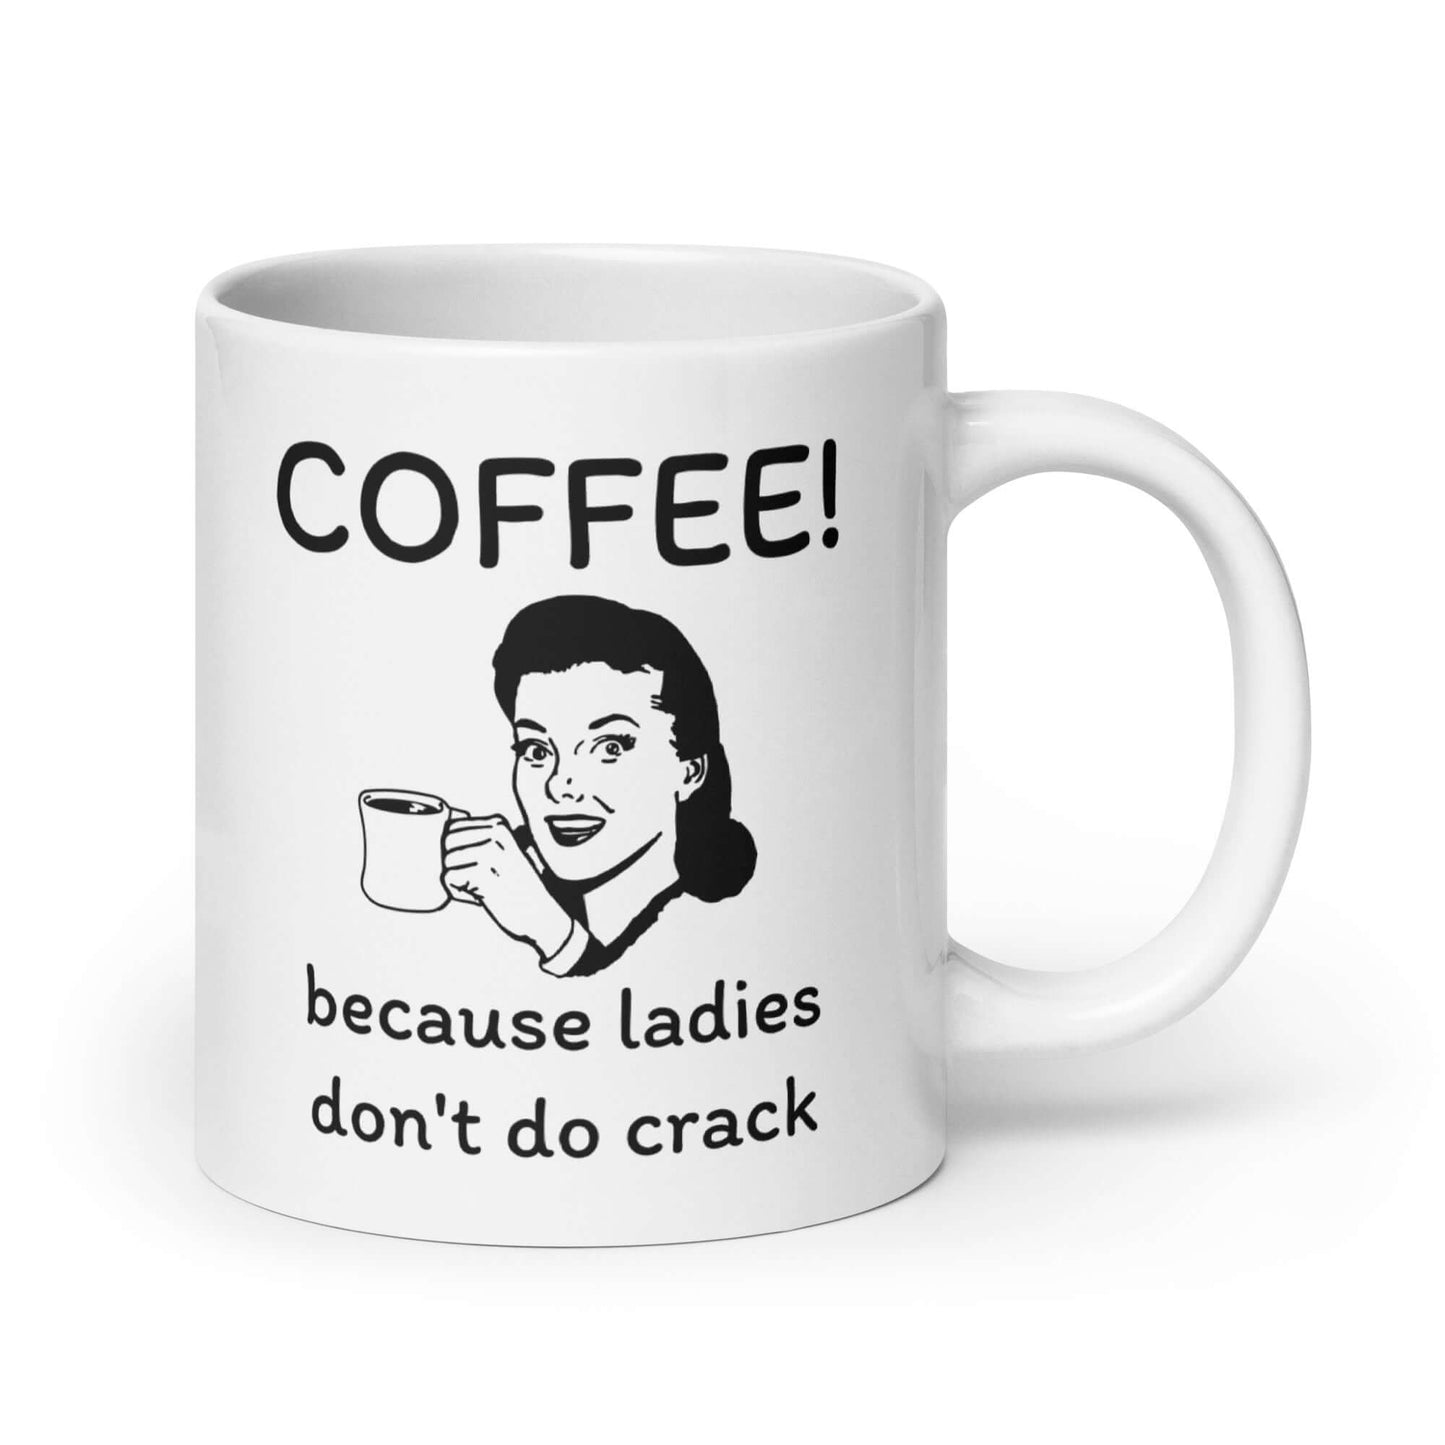 Coffee! because ladies don't do crack funny sarcastic coffee mug